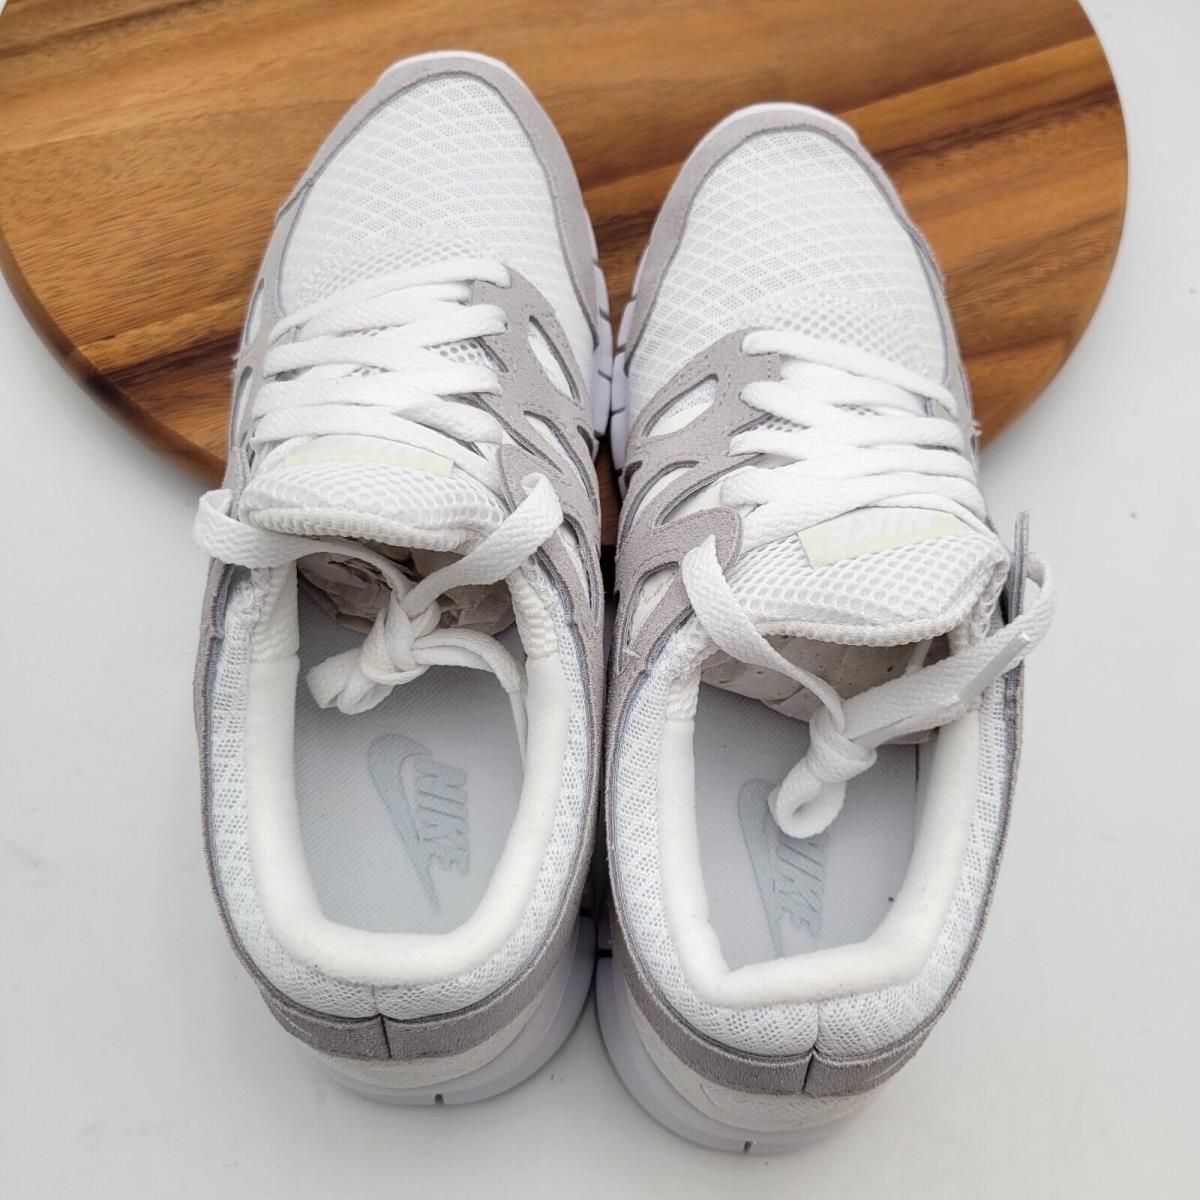 Nike shoes Free Run - White 8